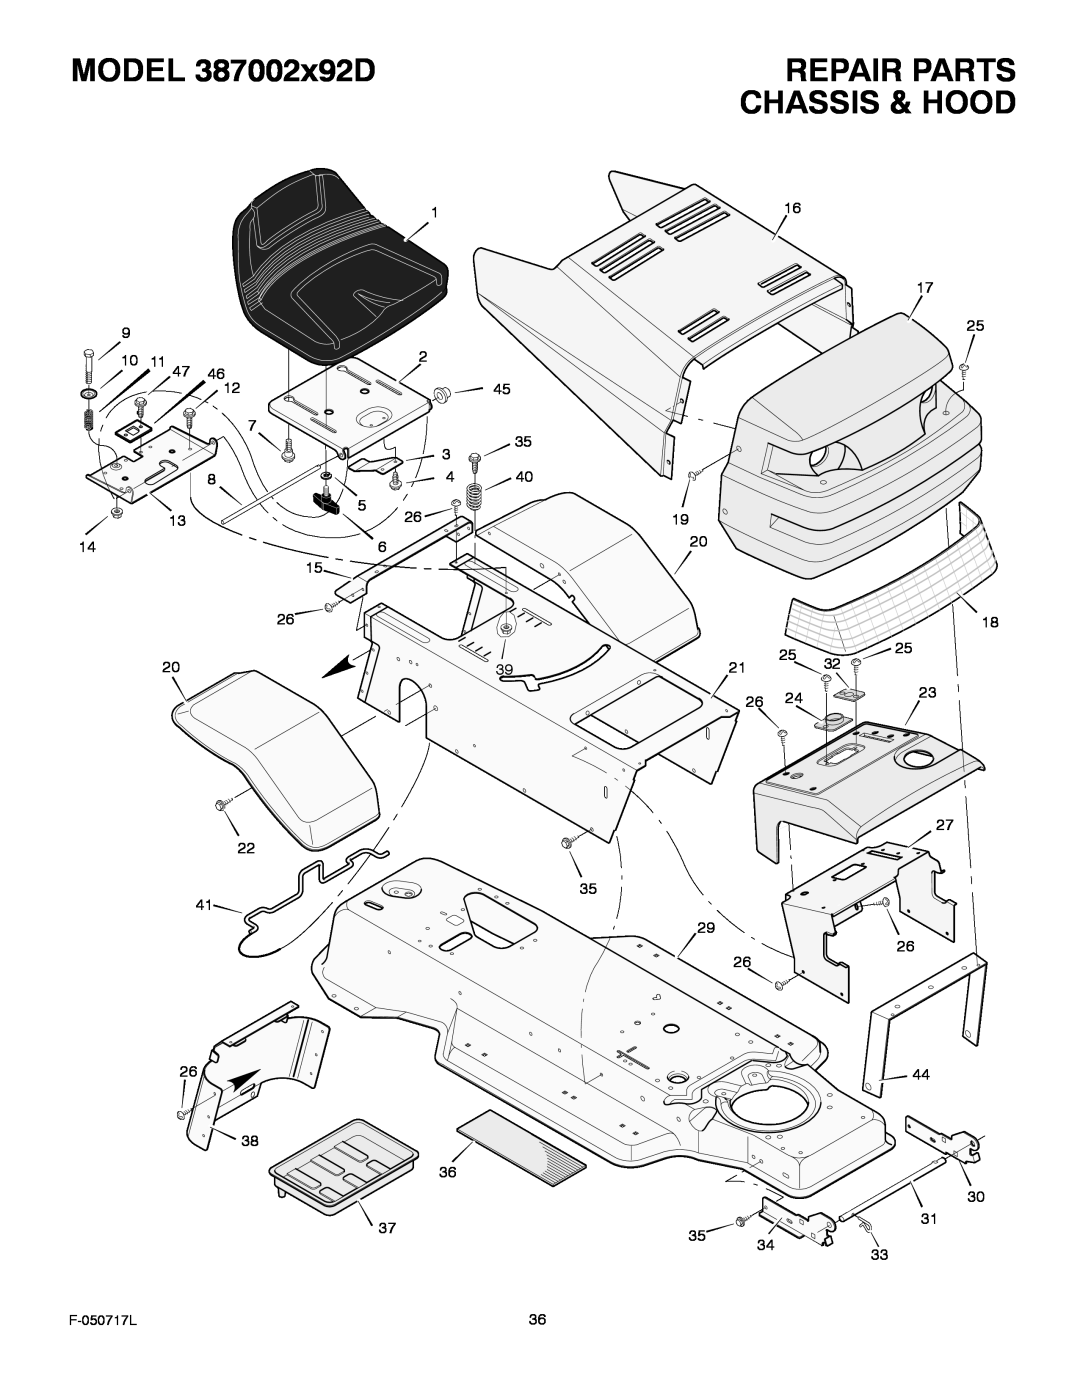 Murray manual MODEL 387002x92D, Repair Parts, Chassis & Hood, F-050717L 